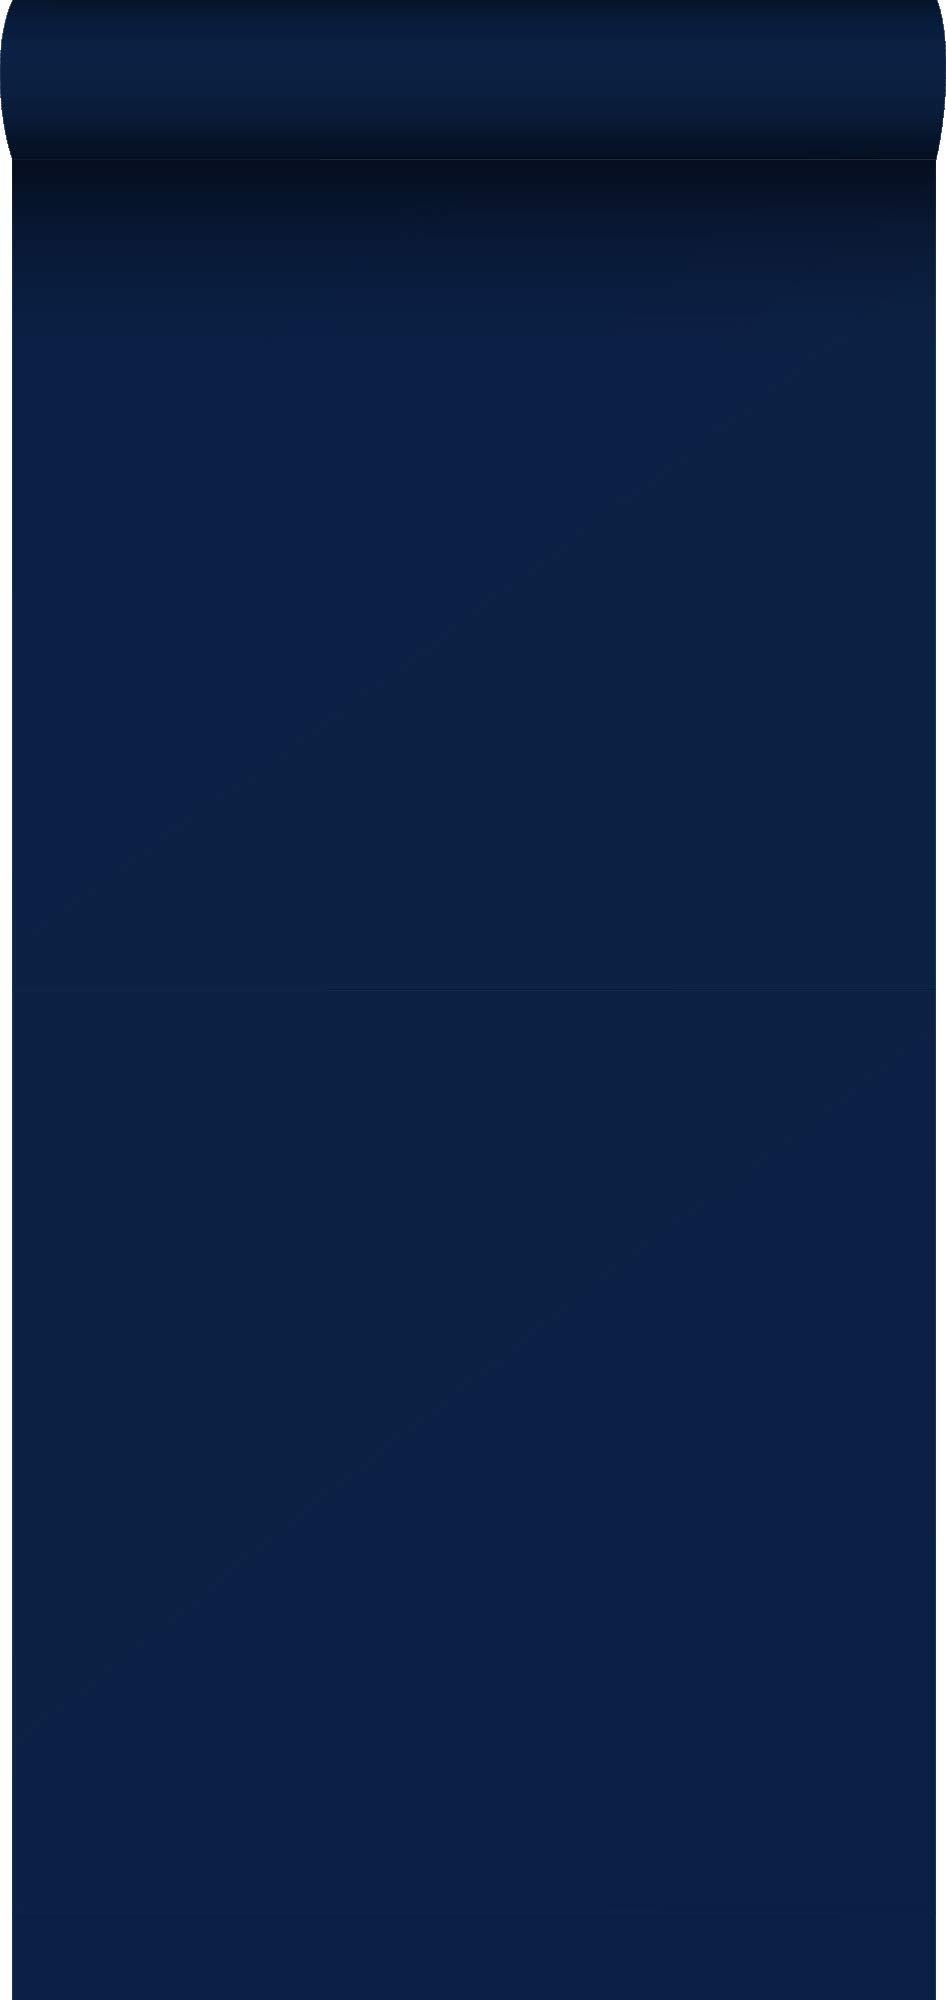 Plain Navy Blue Wallpapers - Top Free Plain Navy Blue Backgrounds